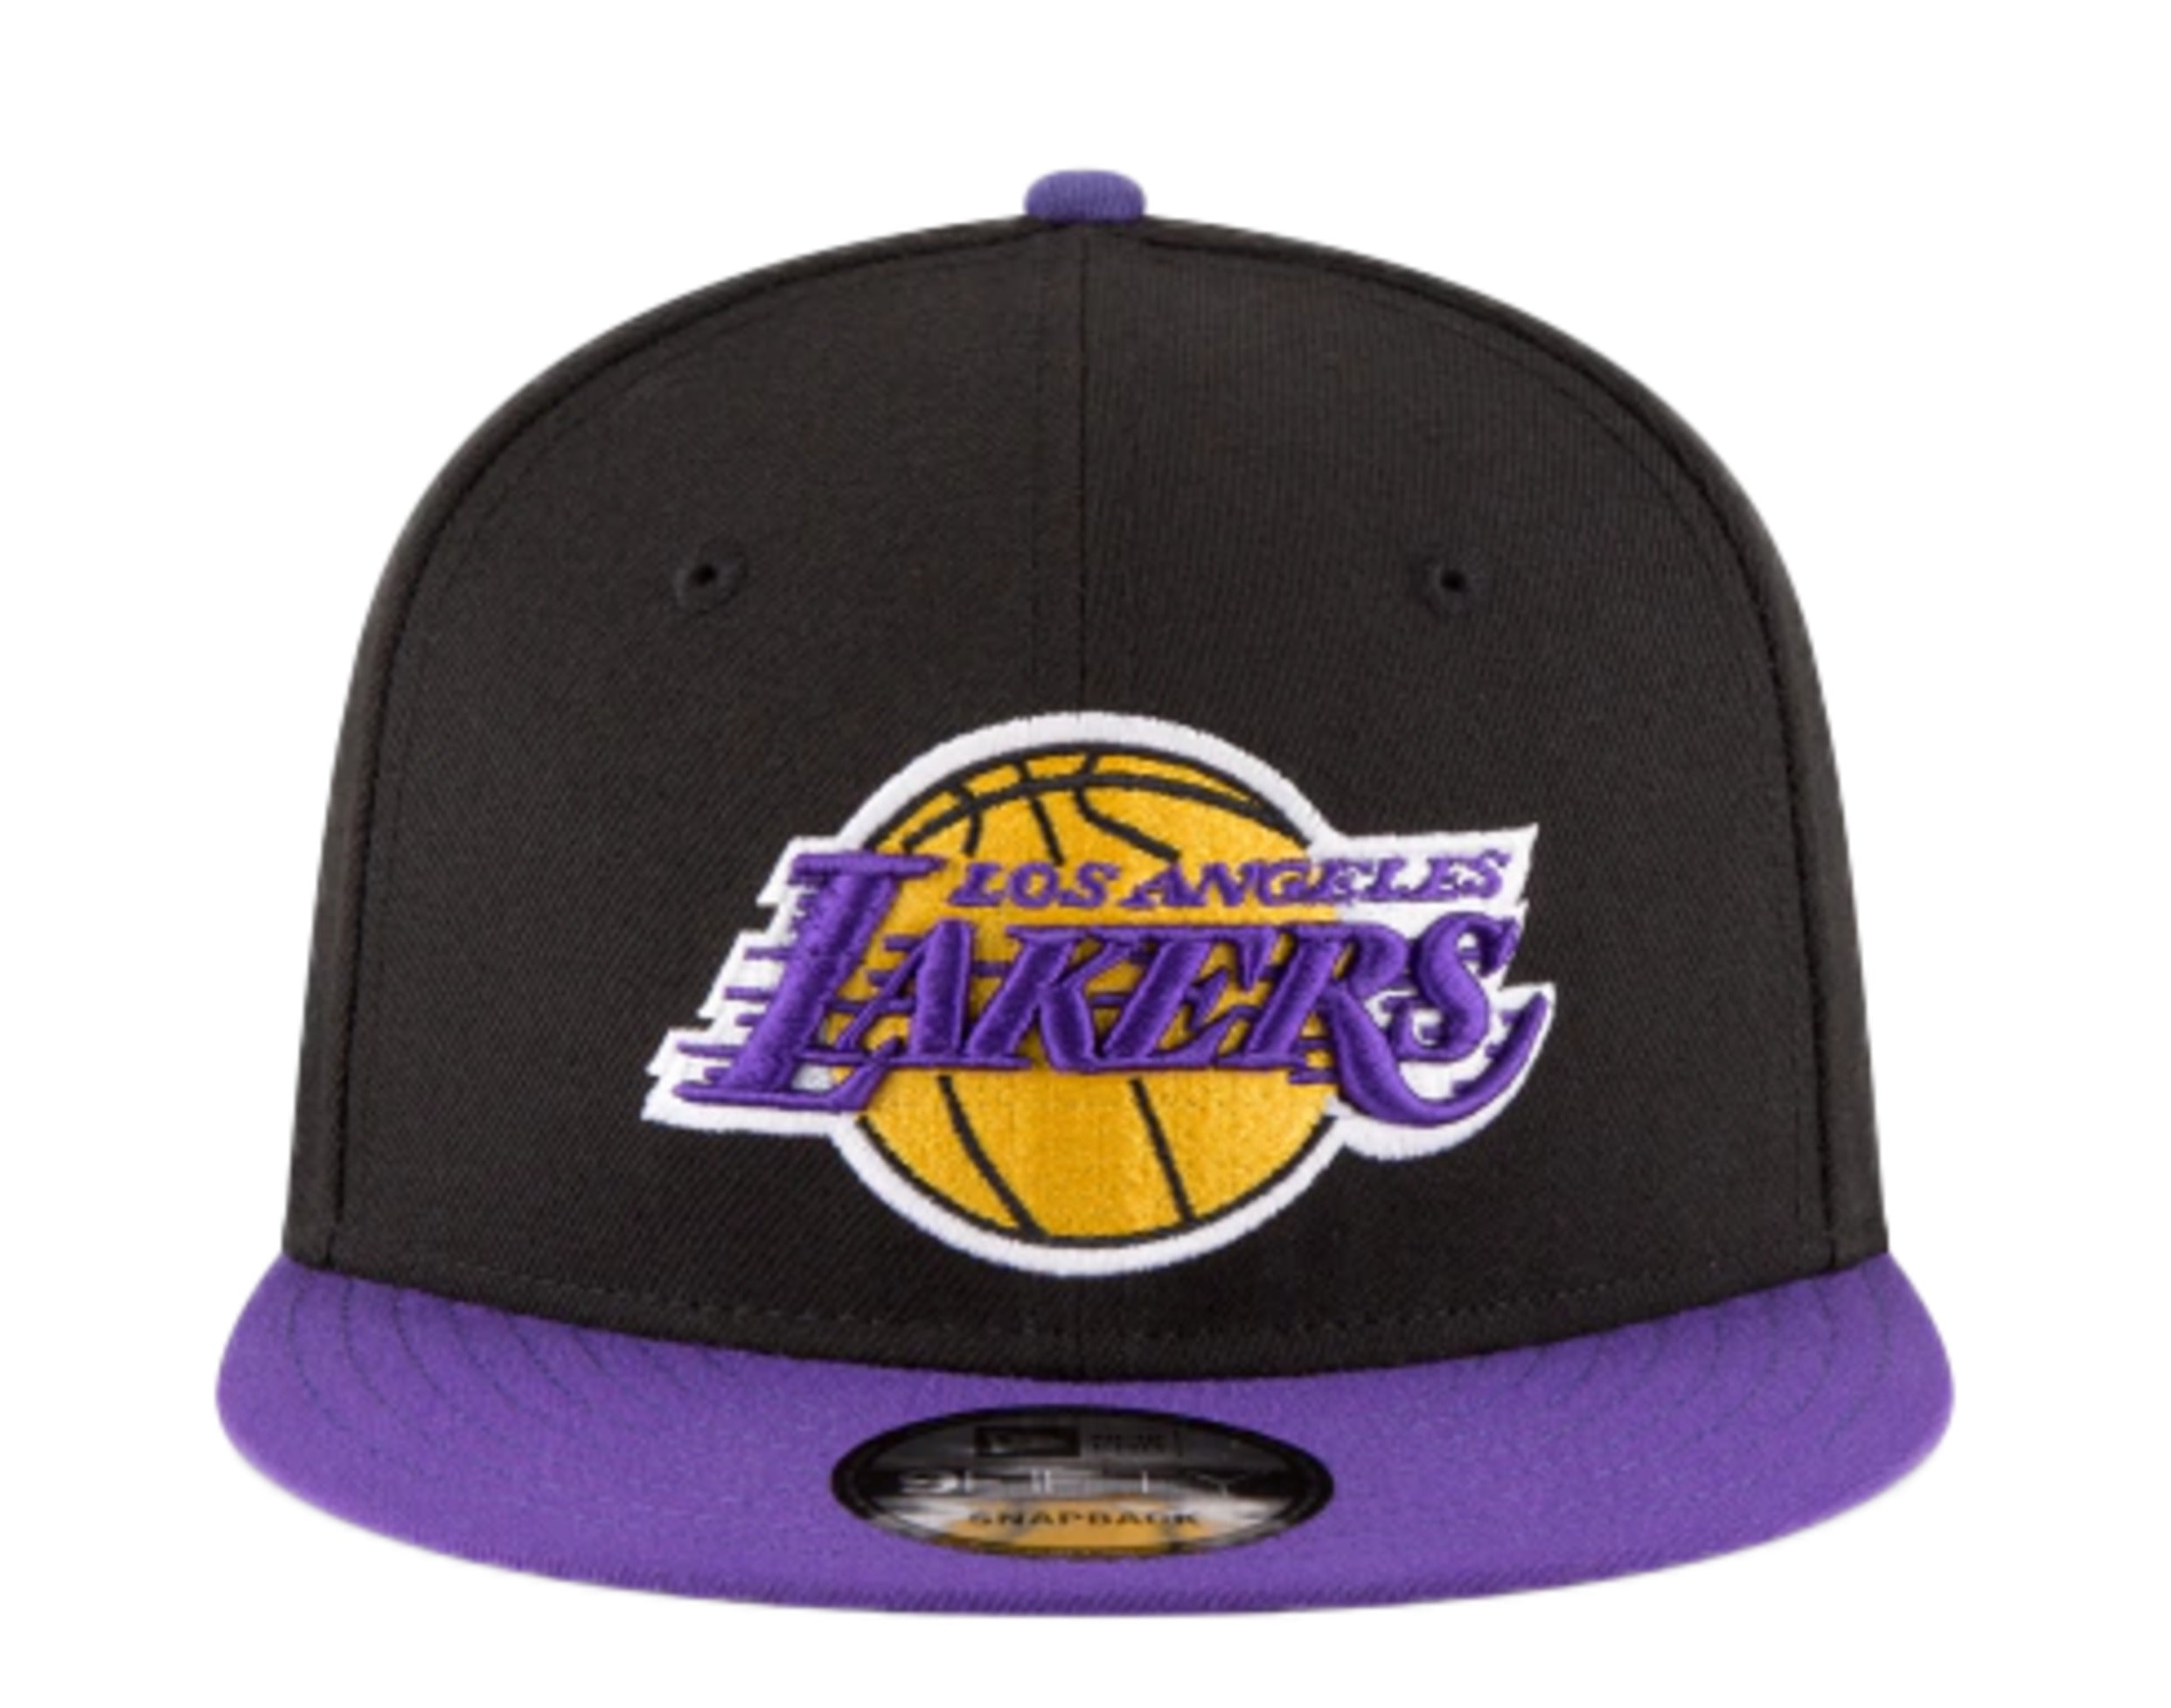 Los Angeles Lakers New Era NBA 9FIFTY 950 Snapback Cap Hat Black Crown Pink Visor Black/Pink Logo